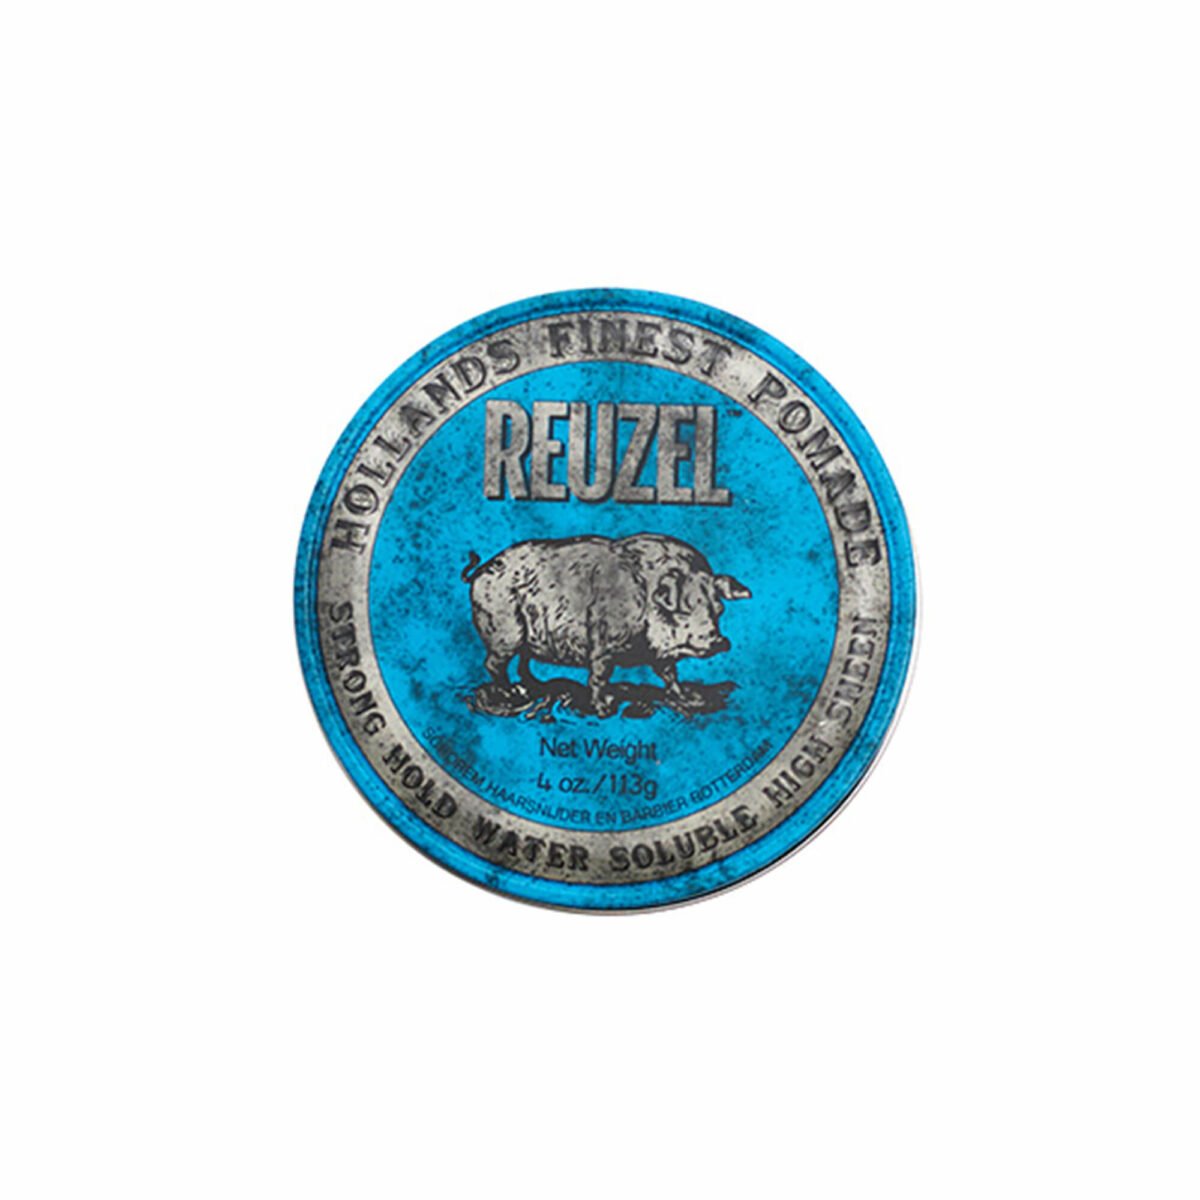 REUZEL BLUE POMADE - STRONG HOLD WATER SOLUBLE H SHEEN 113GR